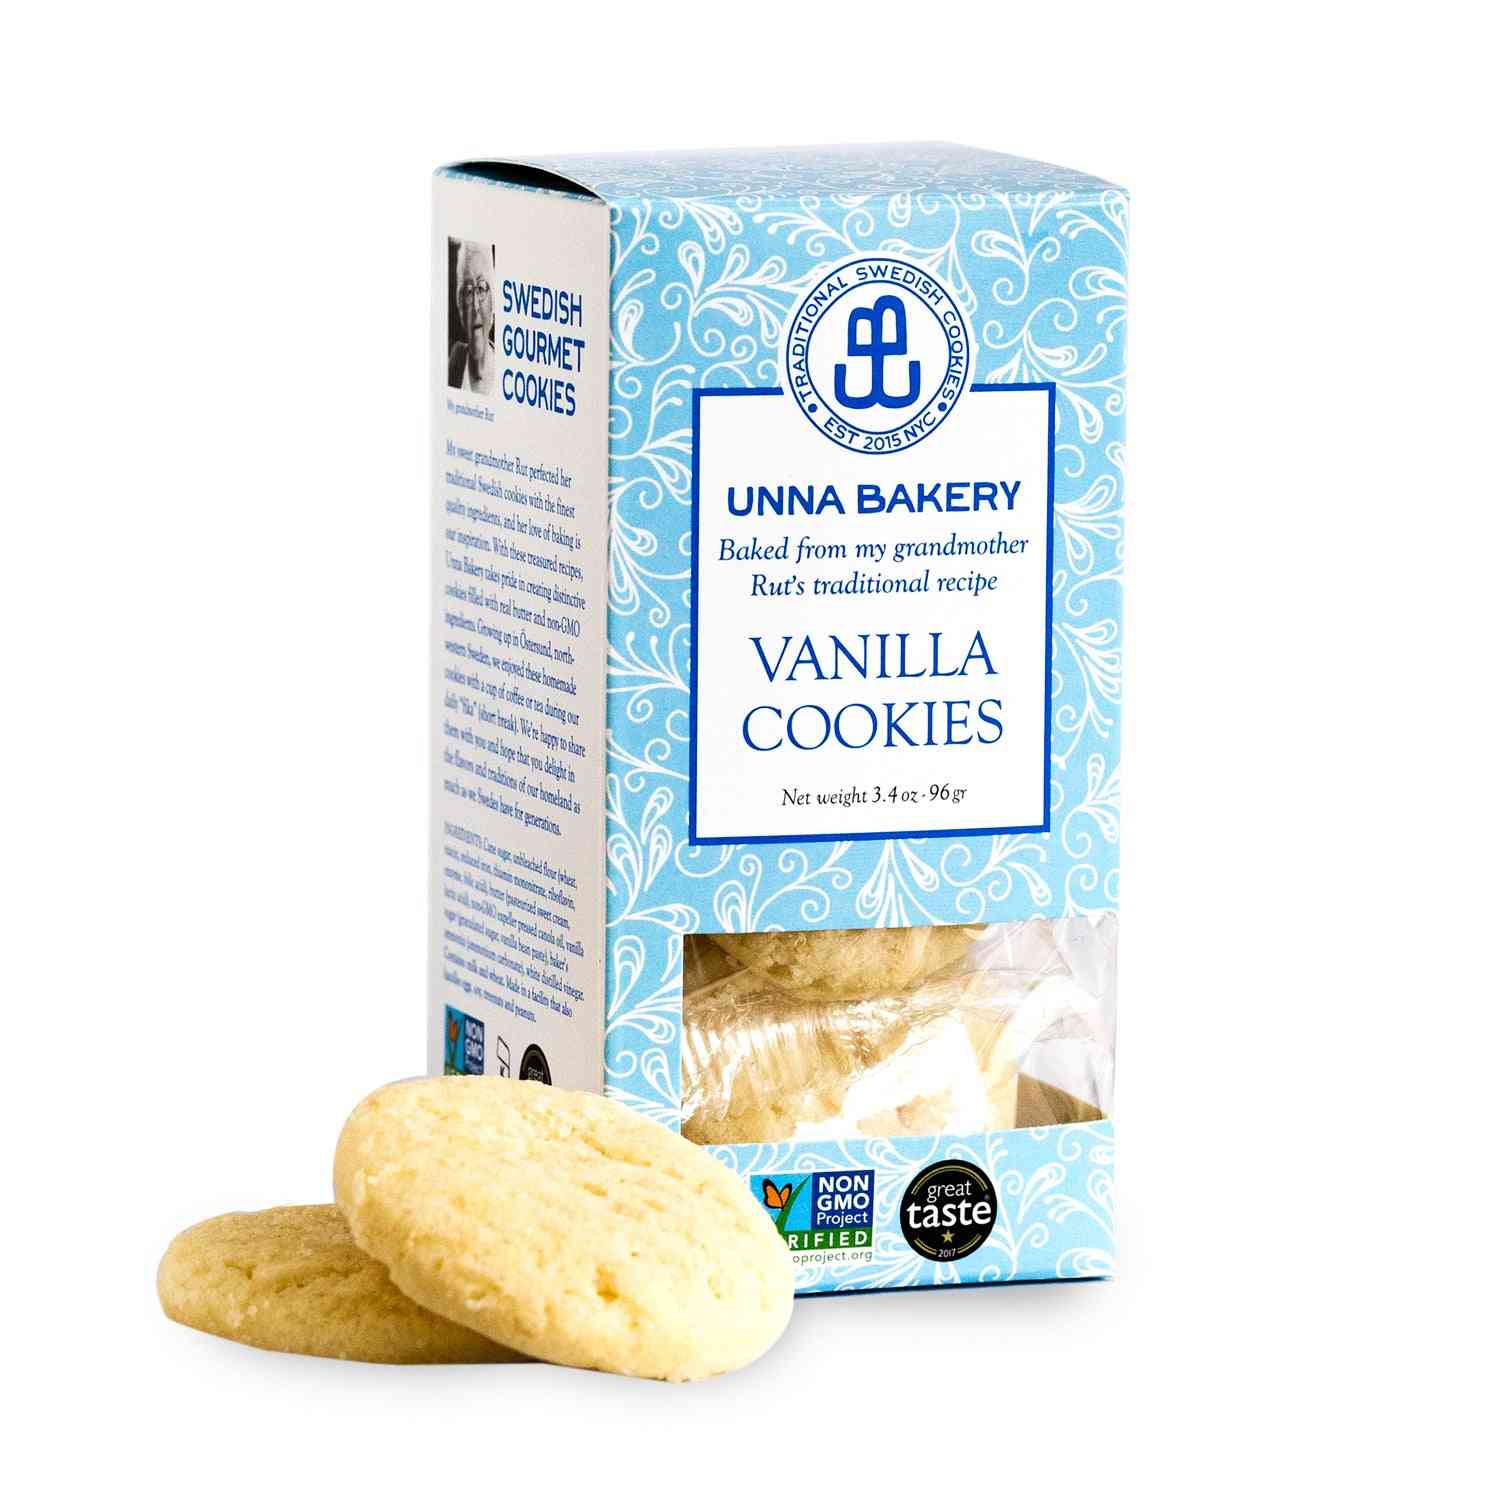 Vanilla Sugar Cookies From Unna Bakery